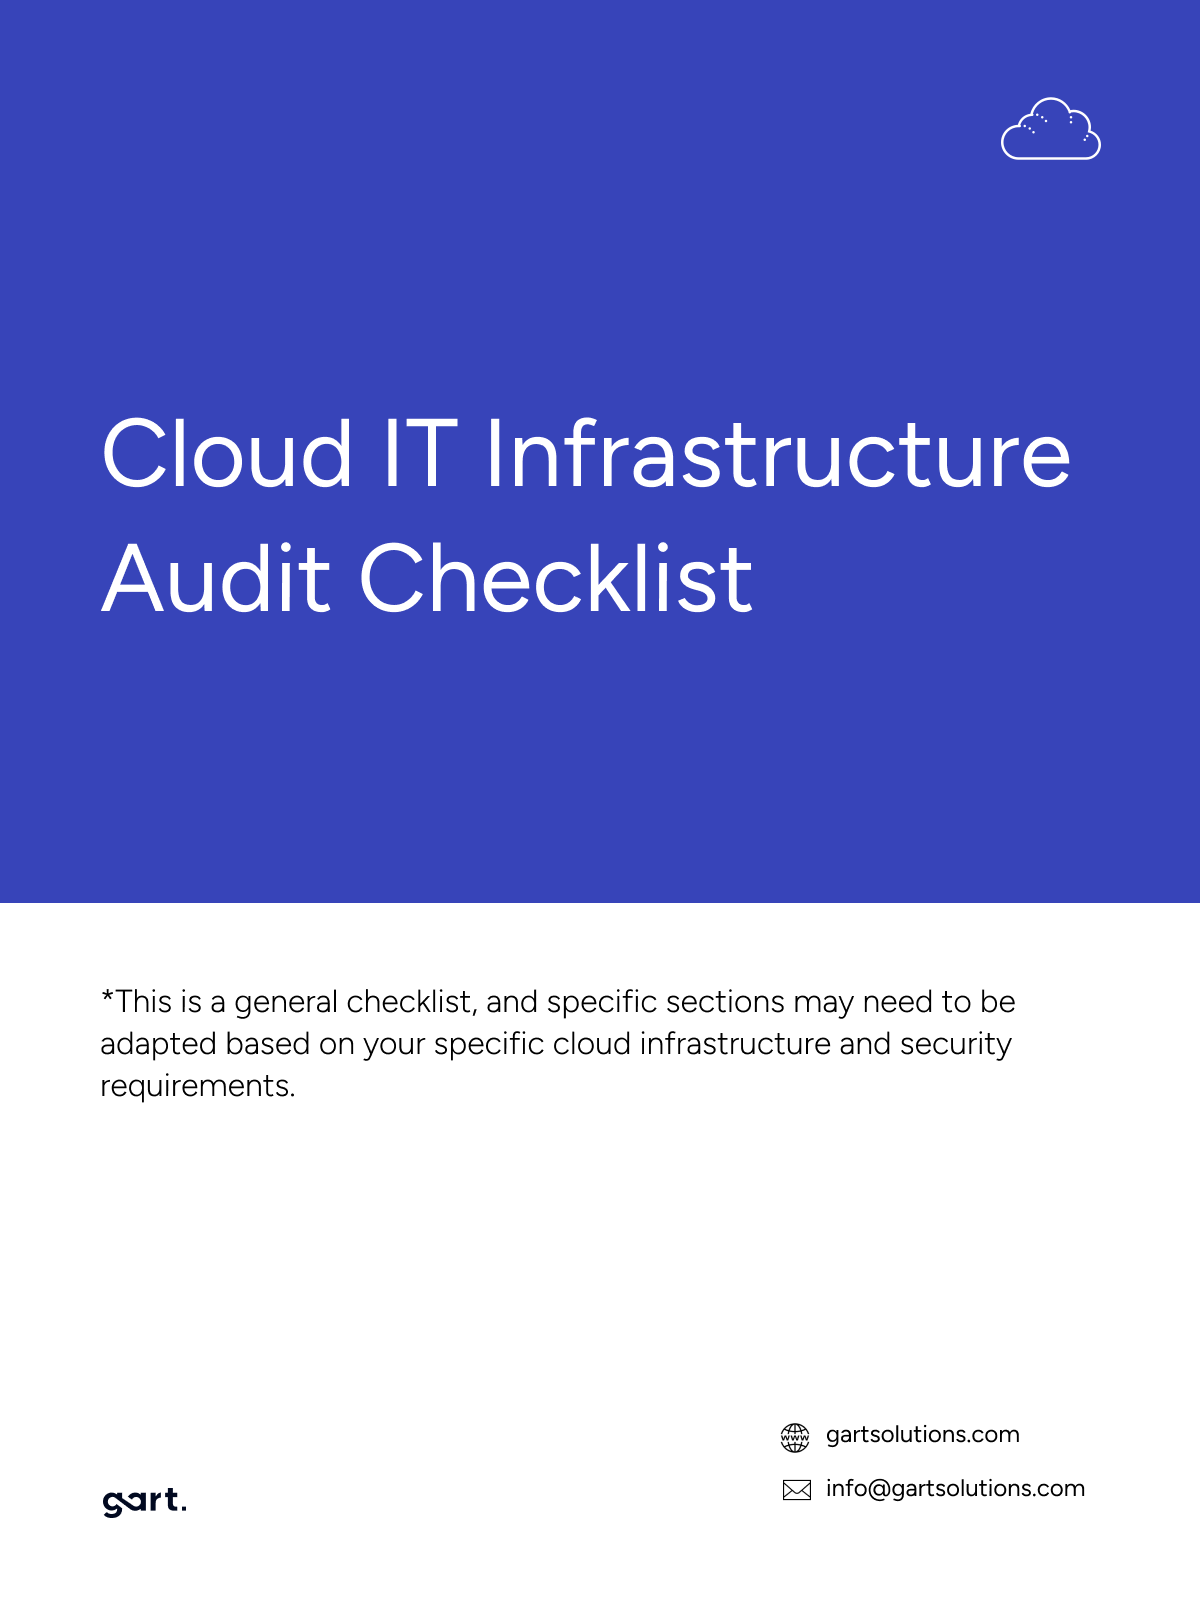 Cloud IT Infrastructure Audit Checklist